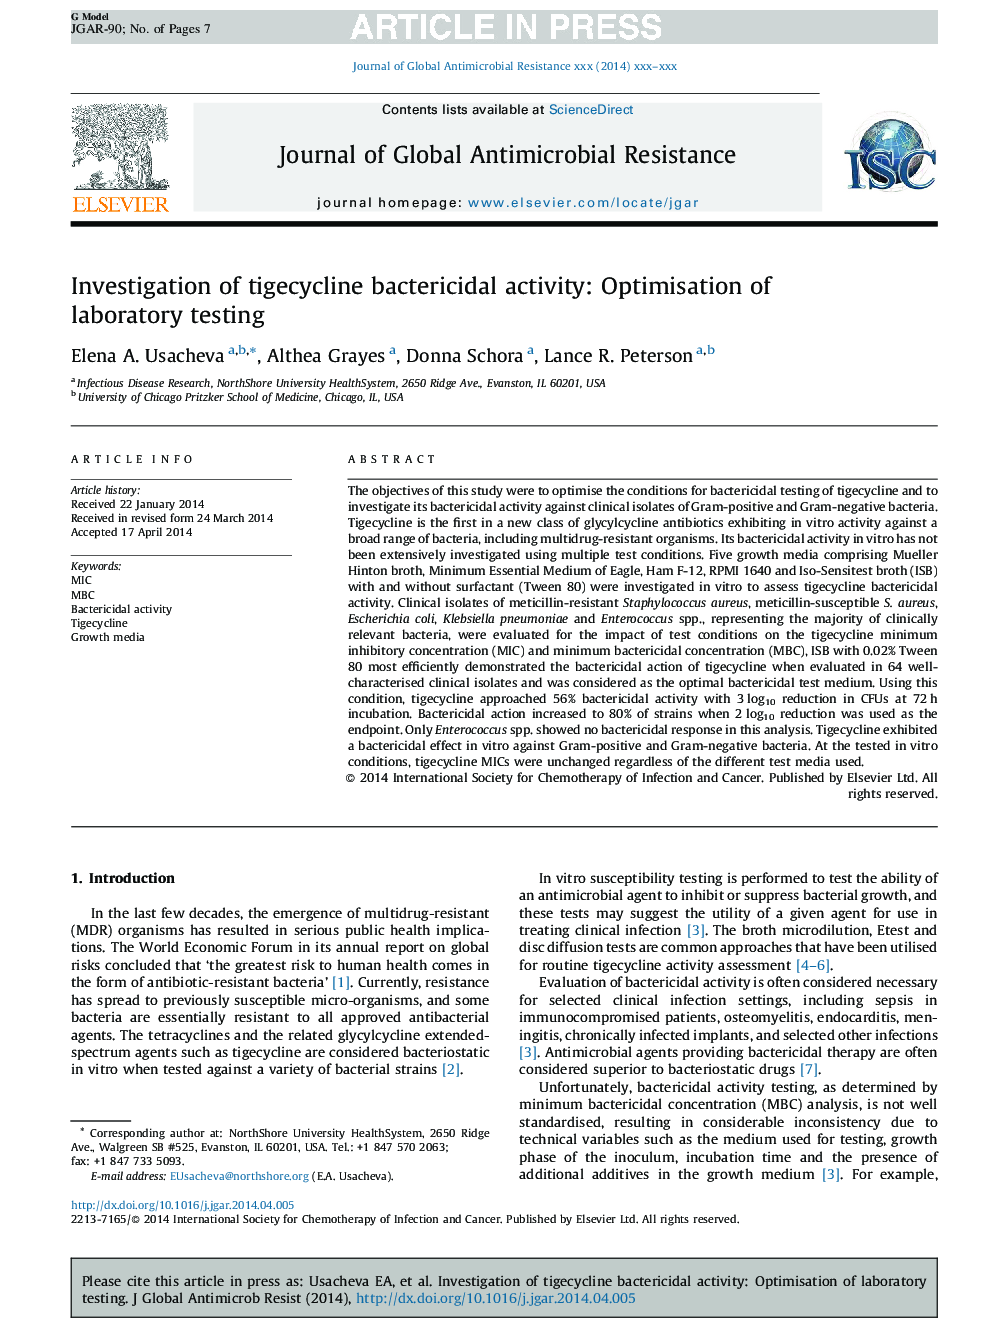 Investigation of tigecycline bactericidal activity: Optimisation of laboratory testing